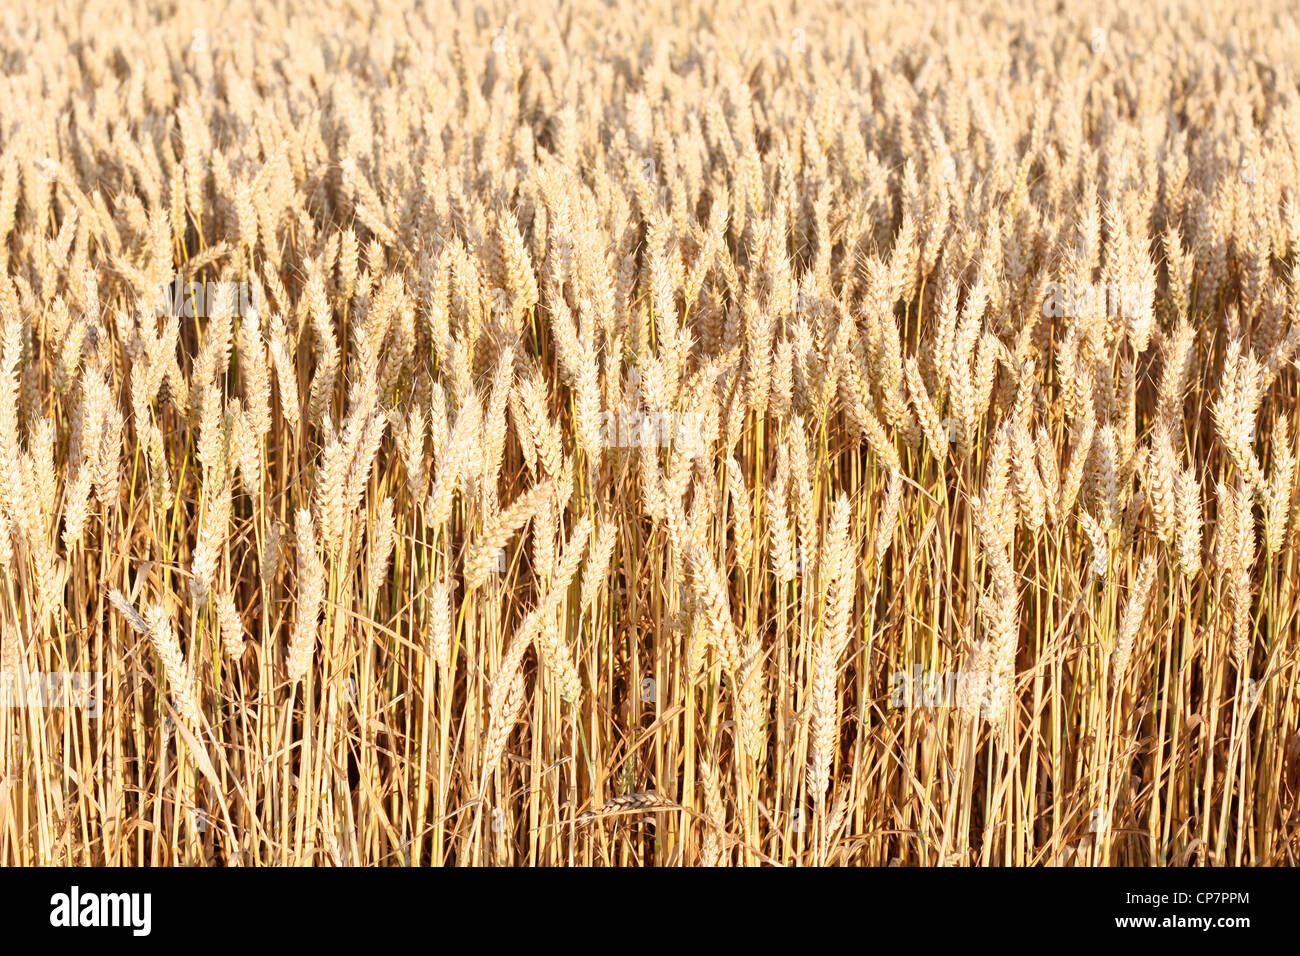 A beautiful corn field in a line Stock Photo